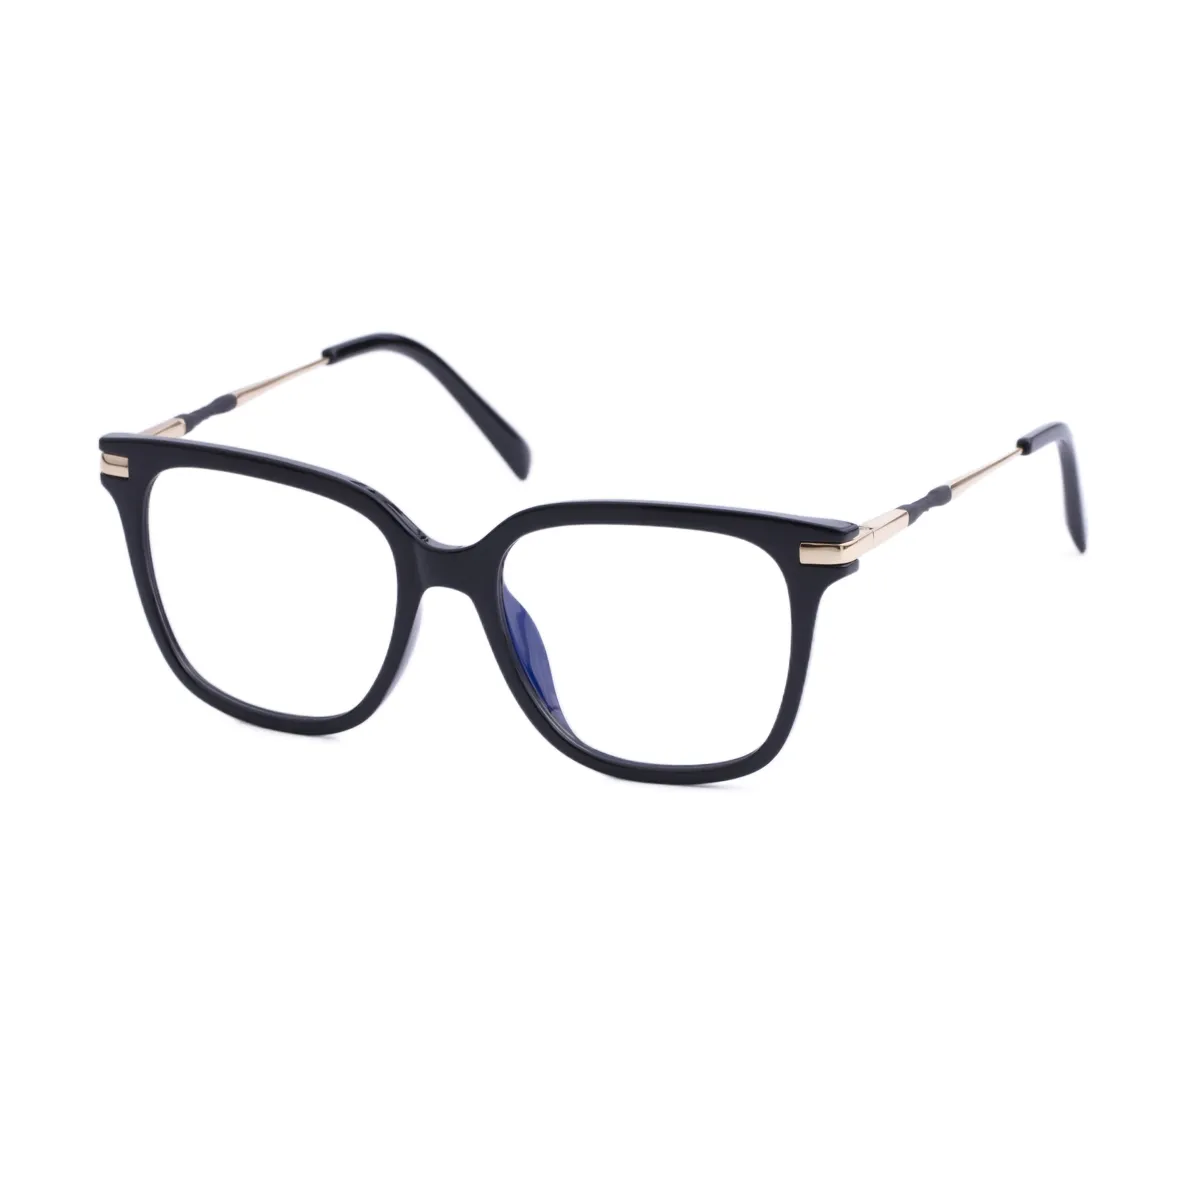 Fashion Square Black Eyeglasses for Women & Men